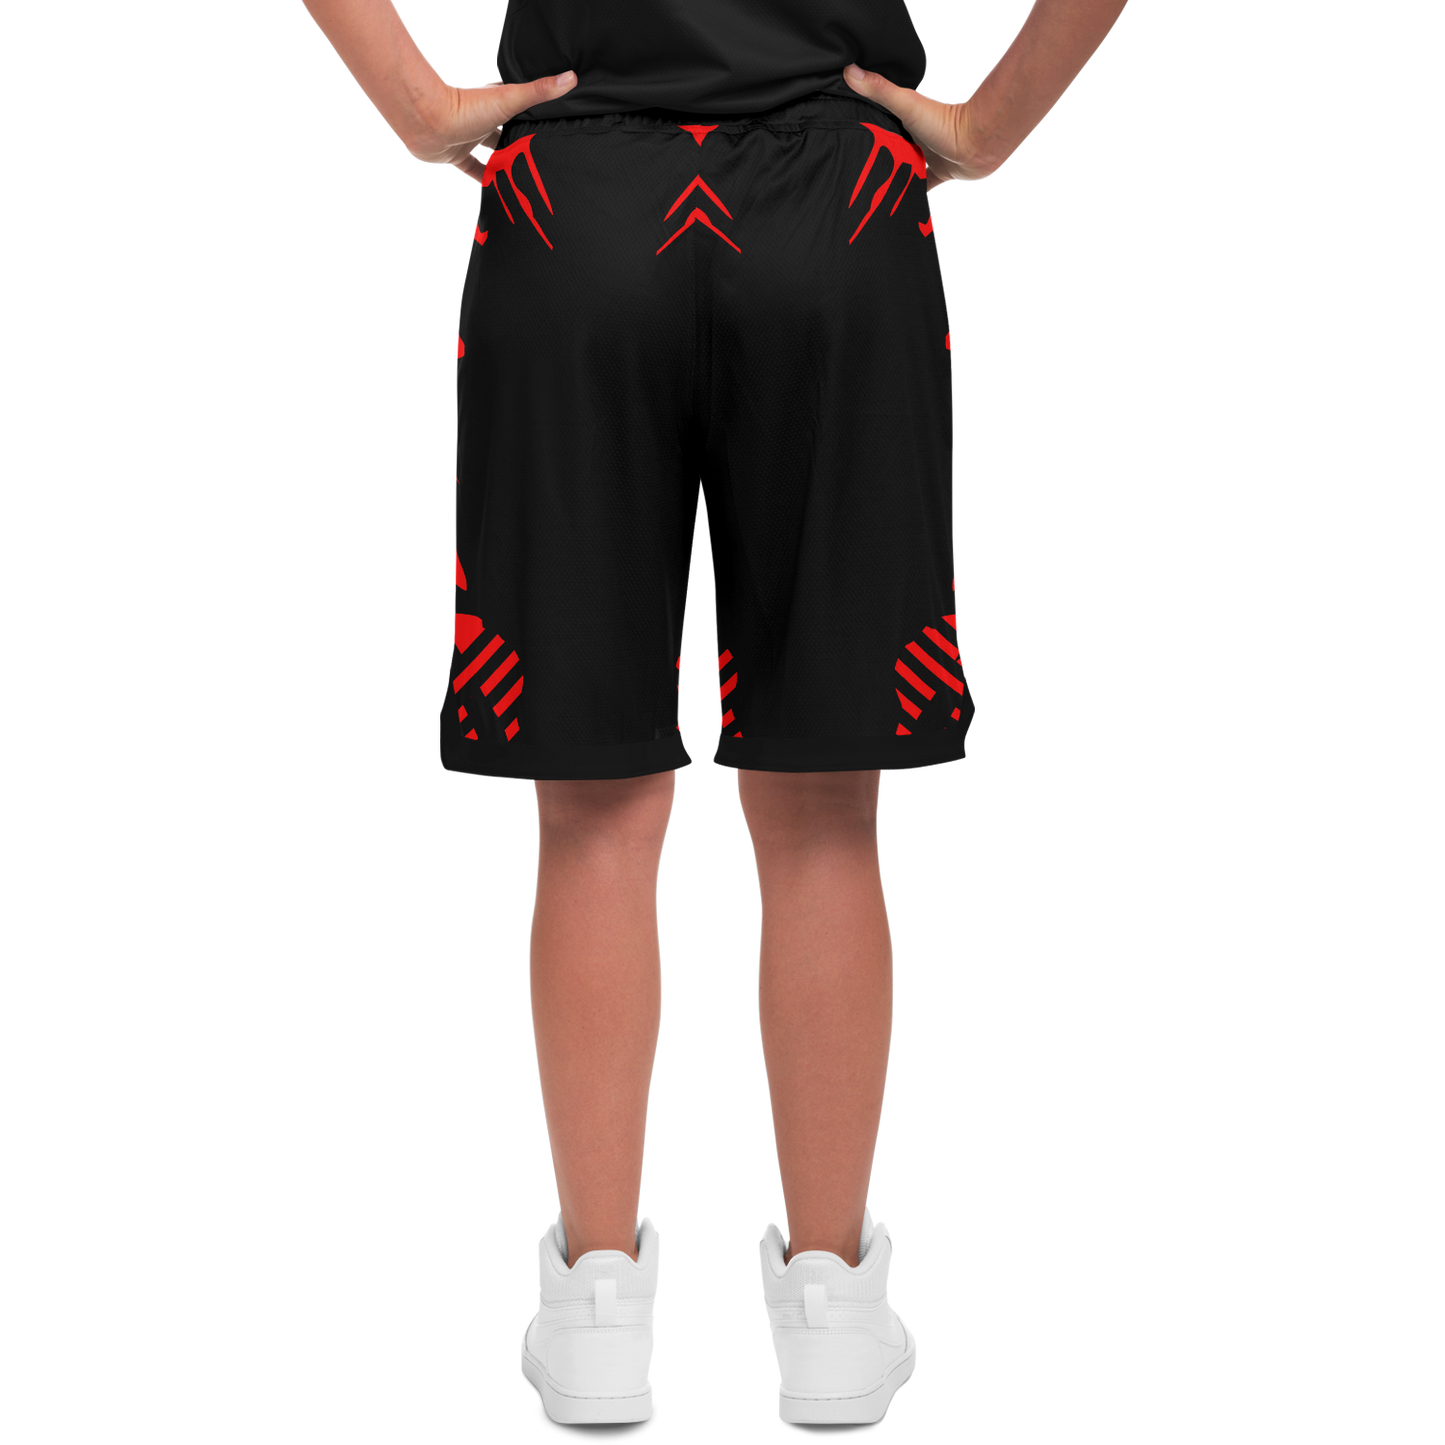 Player1Apparel Basketball Shorts